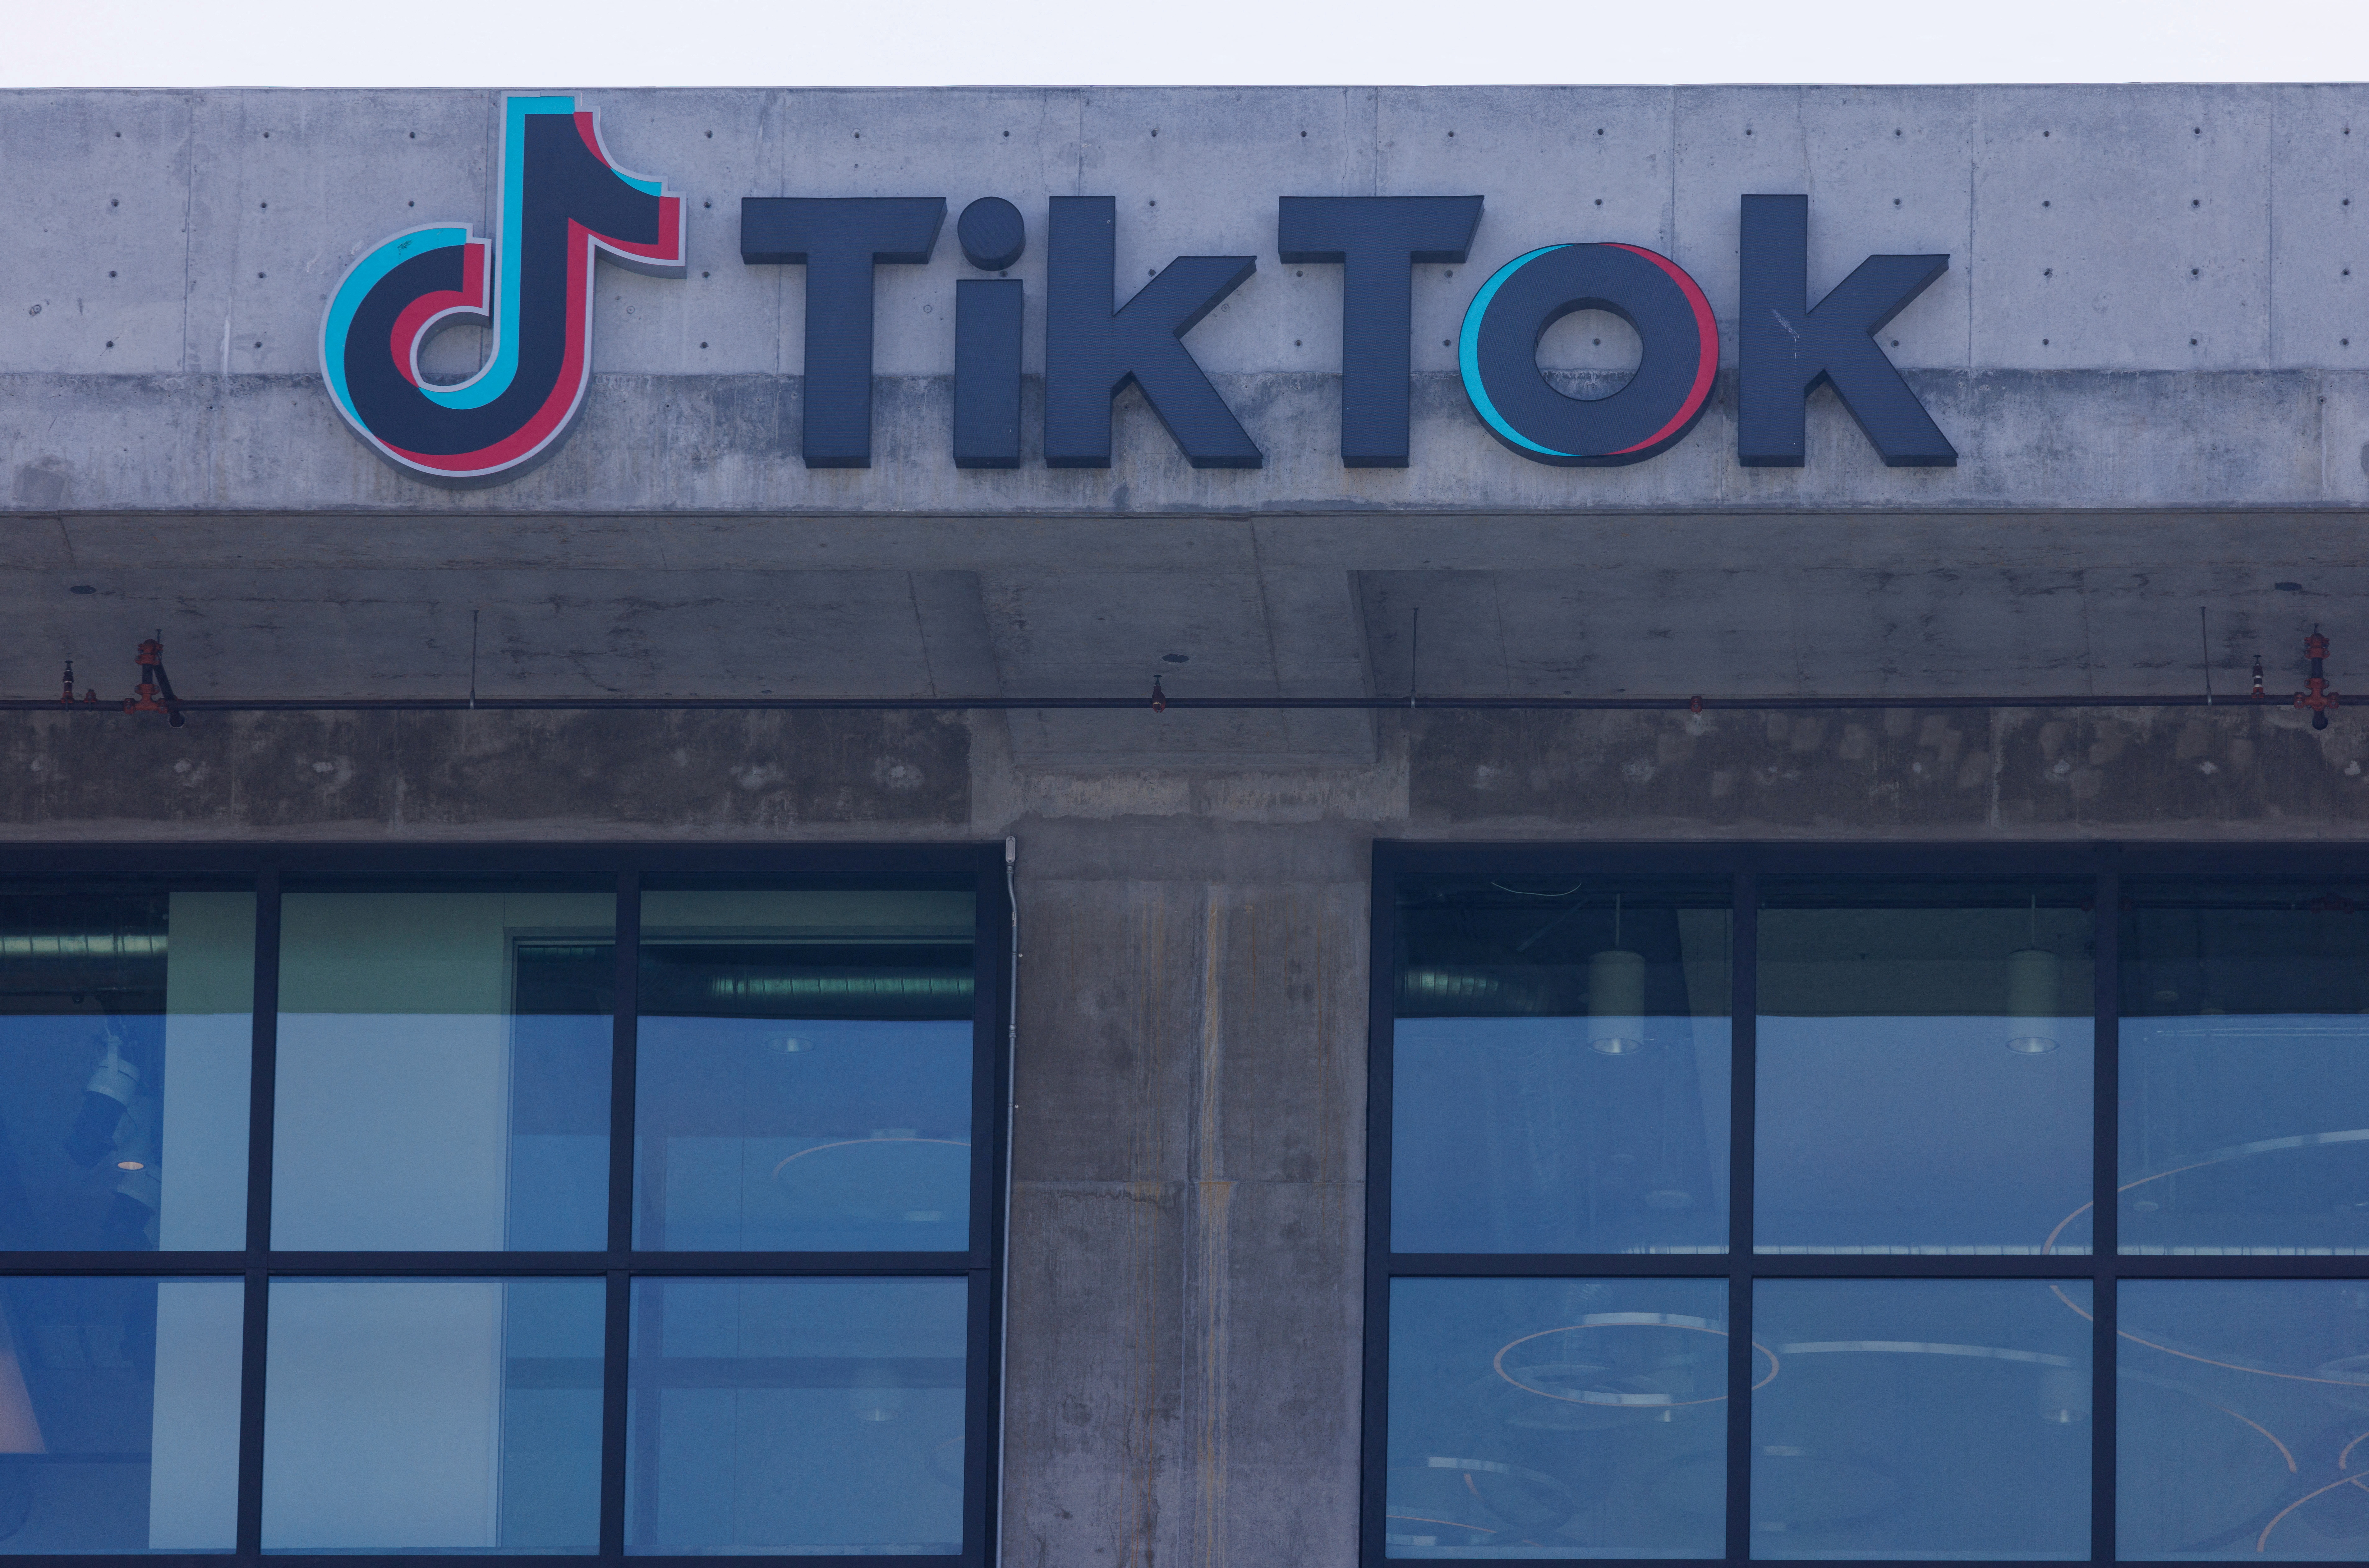 TikTok office buildng shown in California